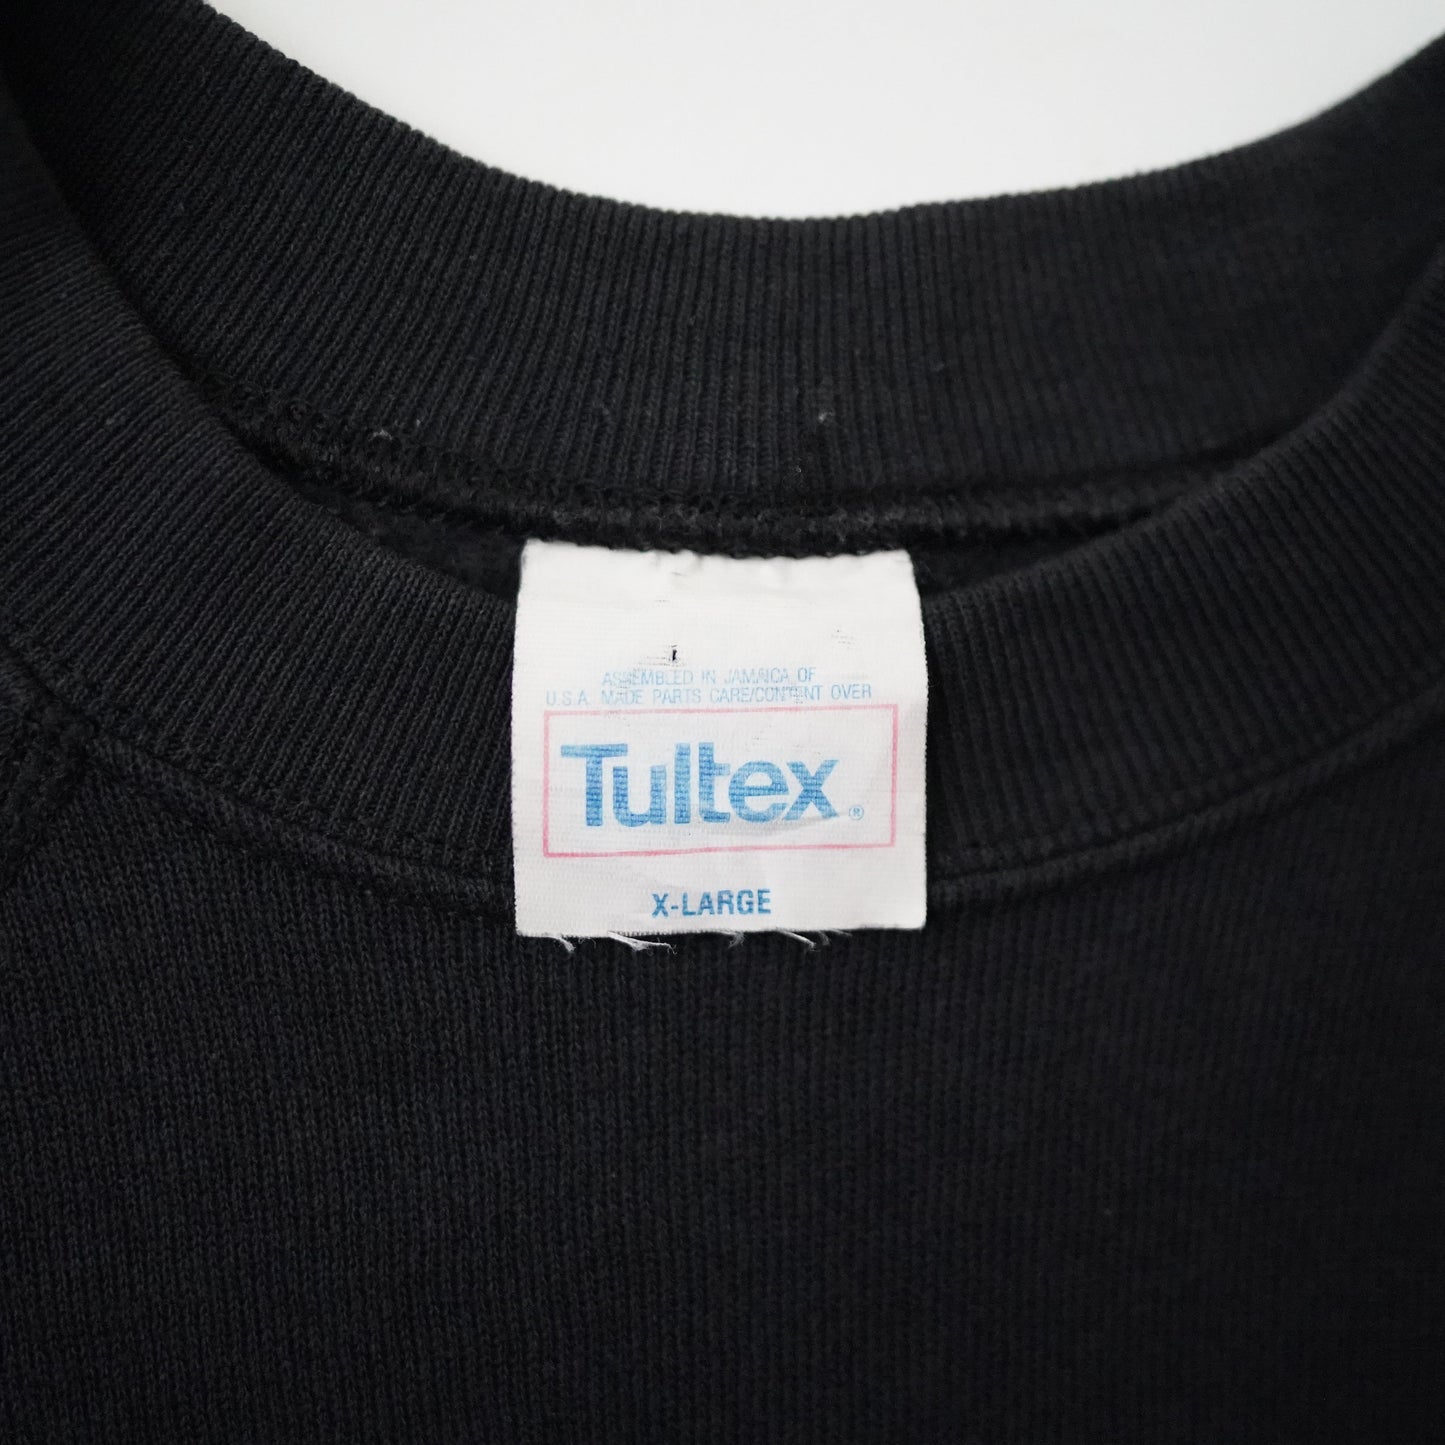 90s Tutex printed sweat